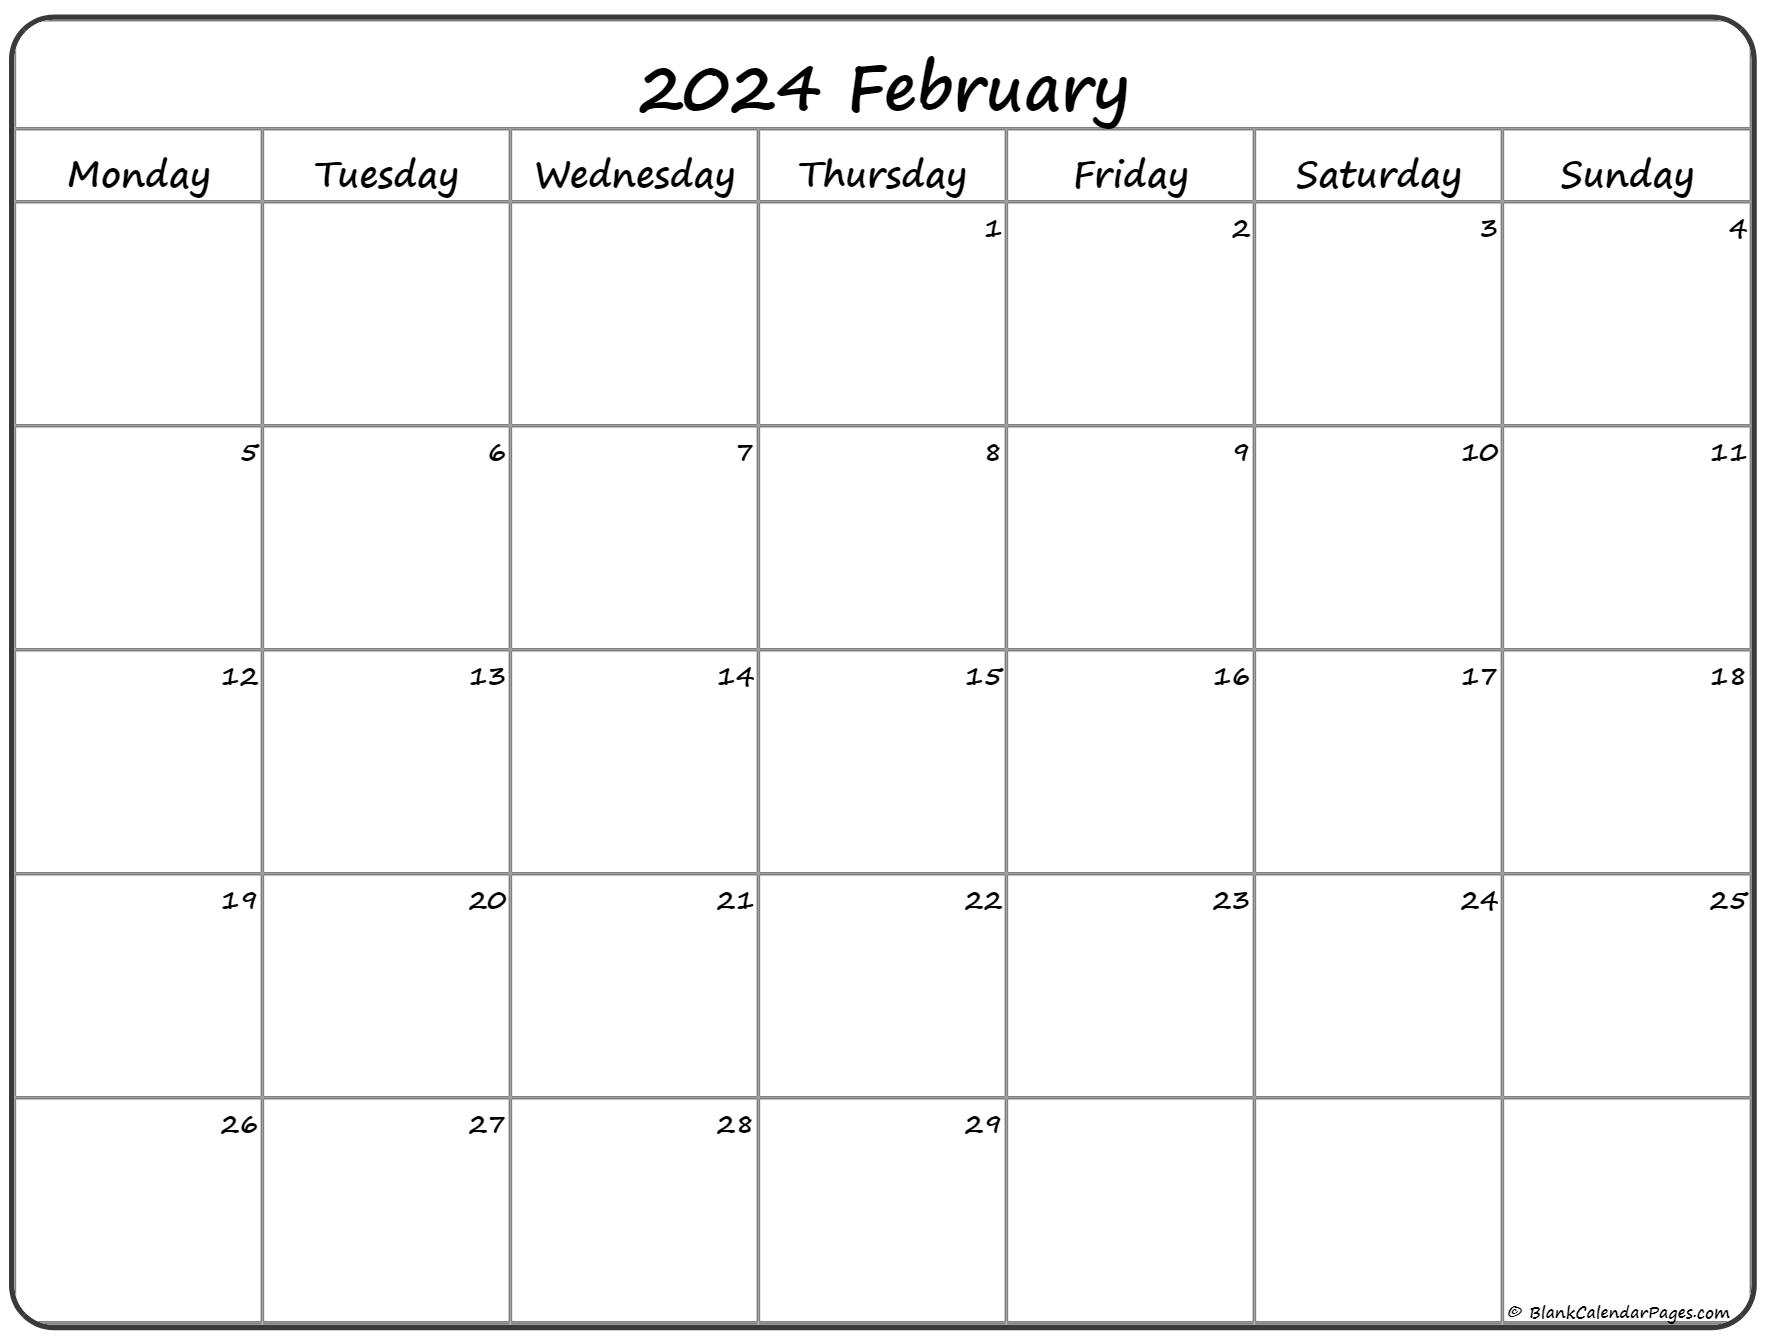 February 2024 Monday Calendar Monday to Sunday